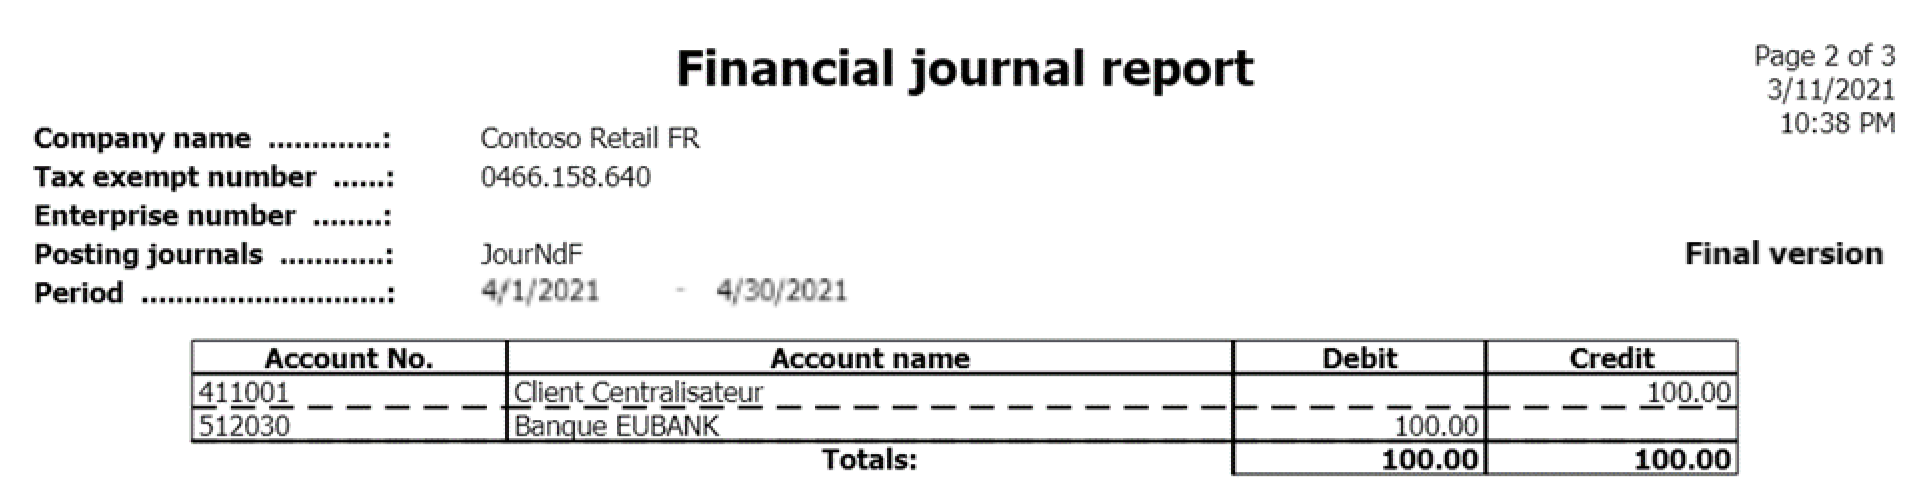 emea-bel-journal-reports-financial-journal-report-2.png